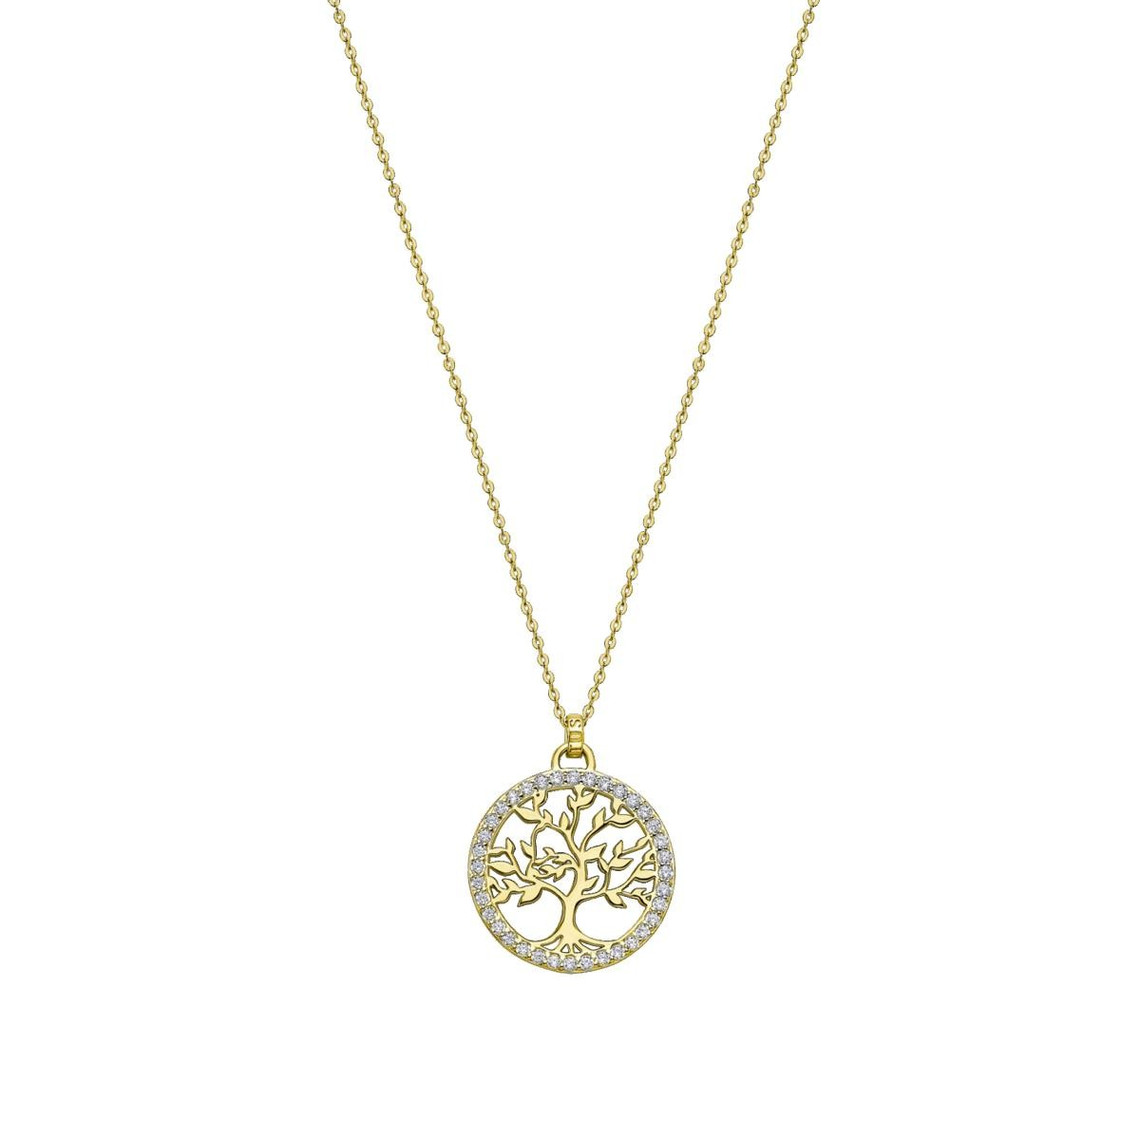 collier et pendentif lotus silver tree of life lp1746-1-2 femme